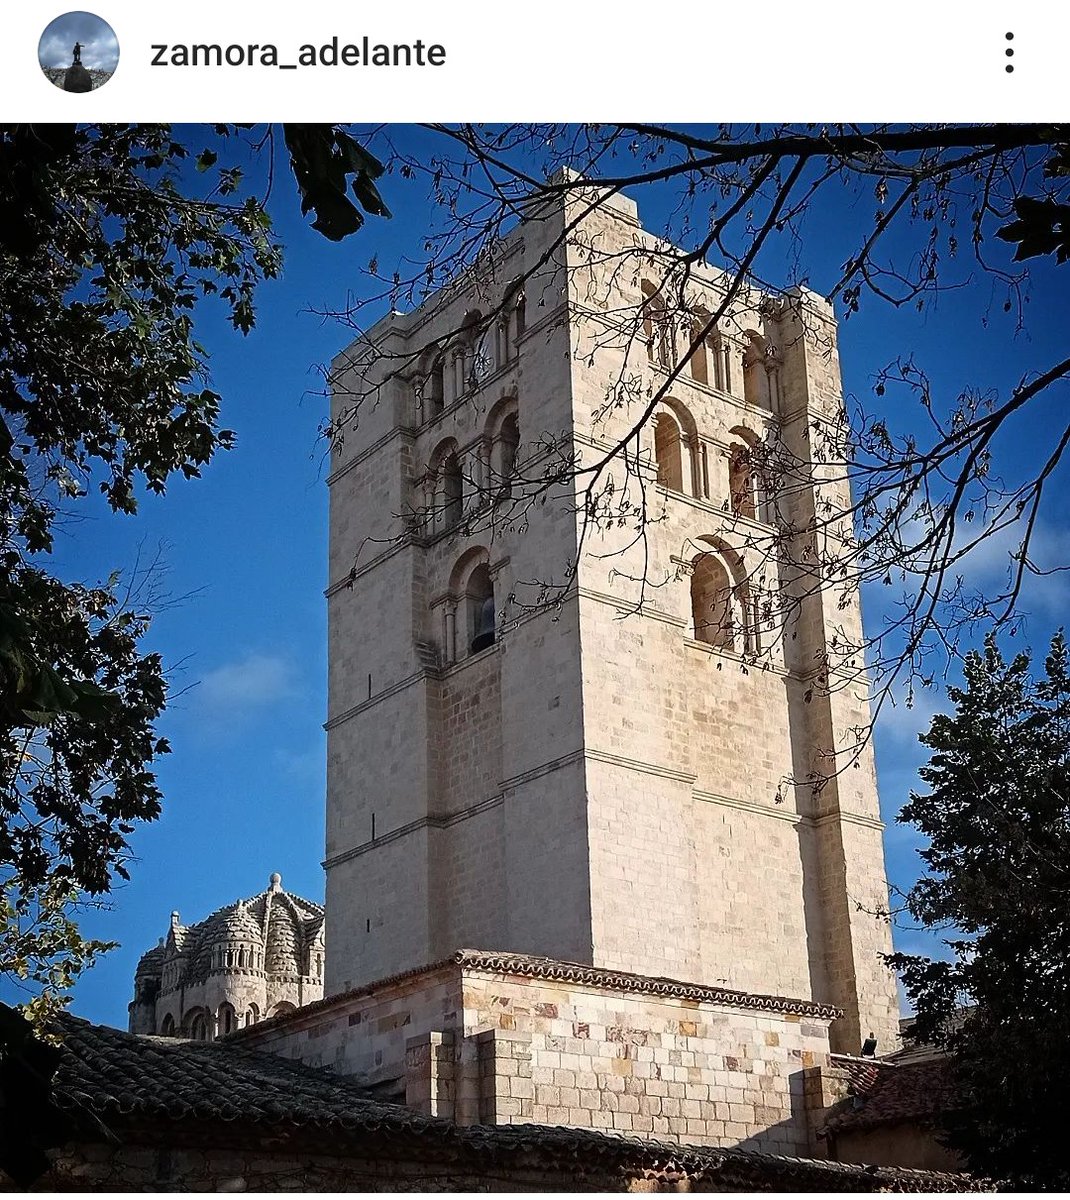 #Zamora #Cathedral #catedral #catedralzamora #románico #romanicart #romámicodelduero #travelphotography #FelizJueves #zamoraenamora #visitaobligada #visitzamora #visitazamora #Zamora_Adelante